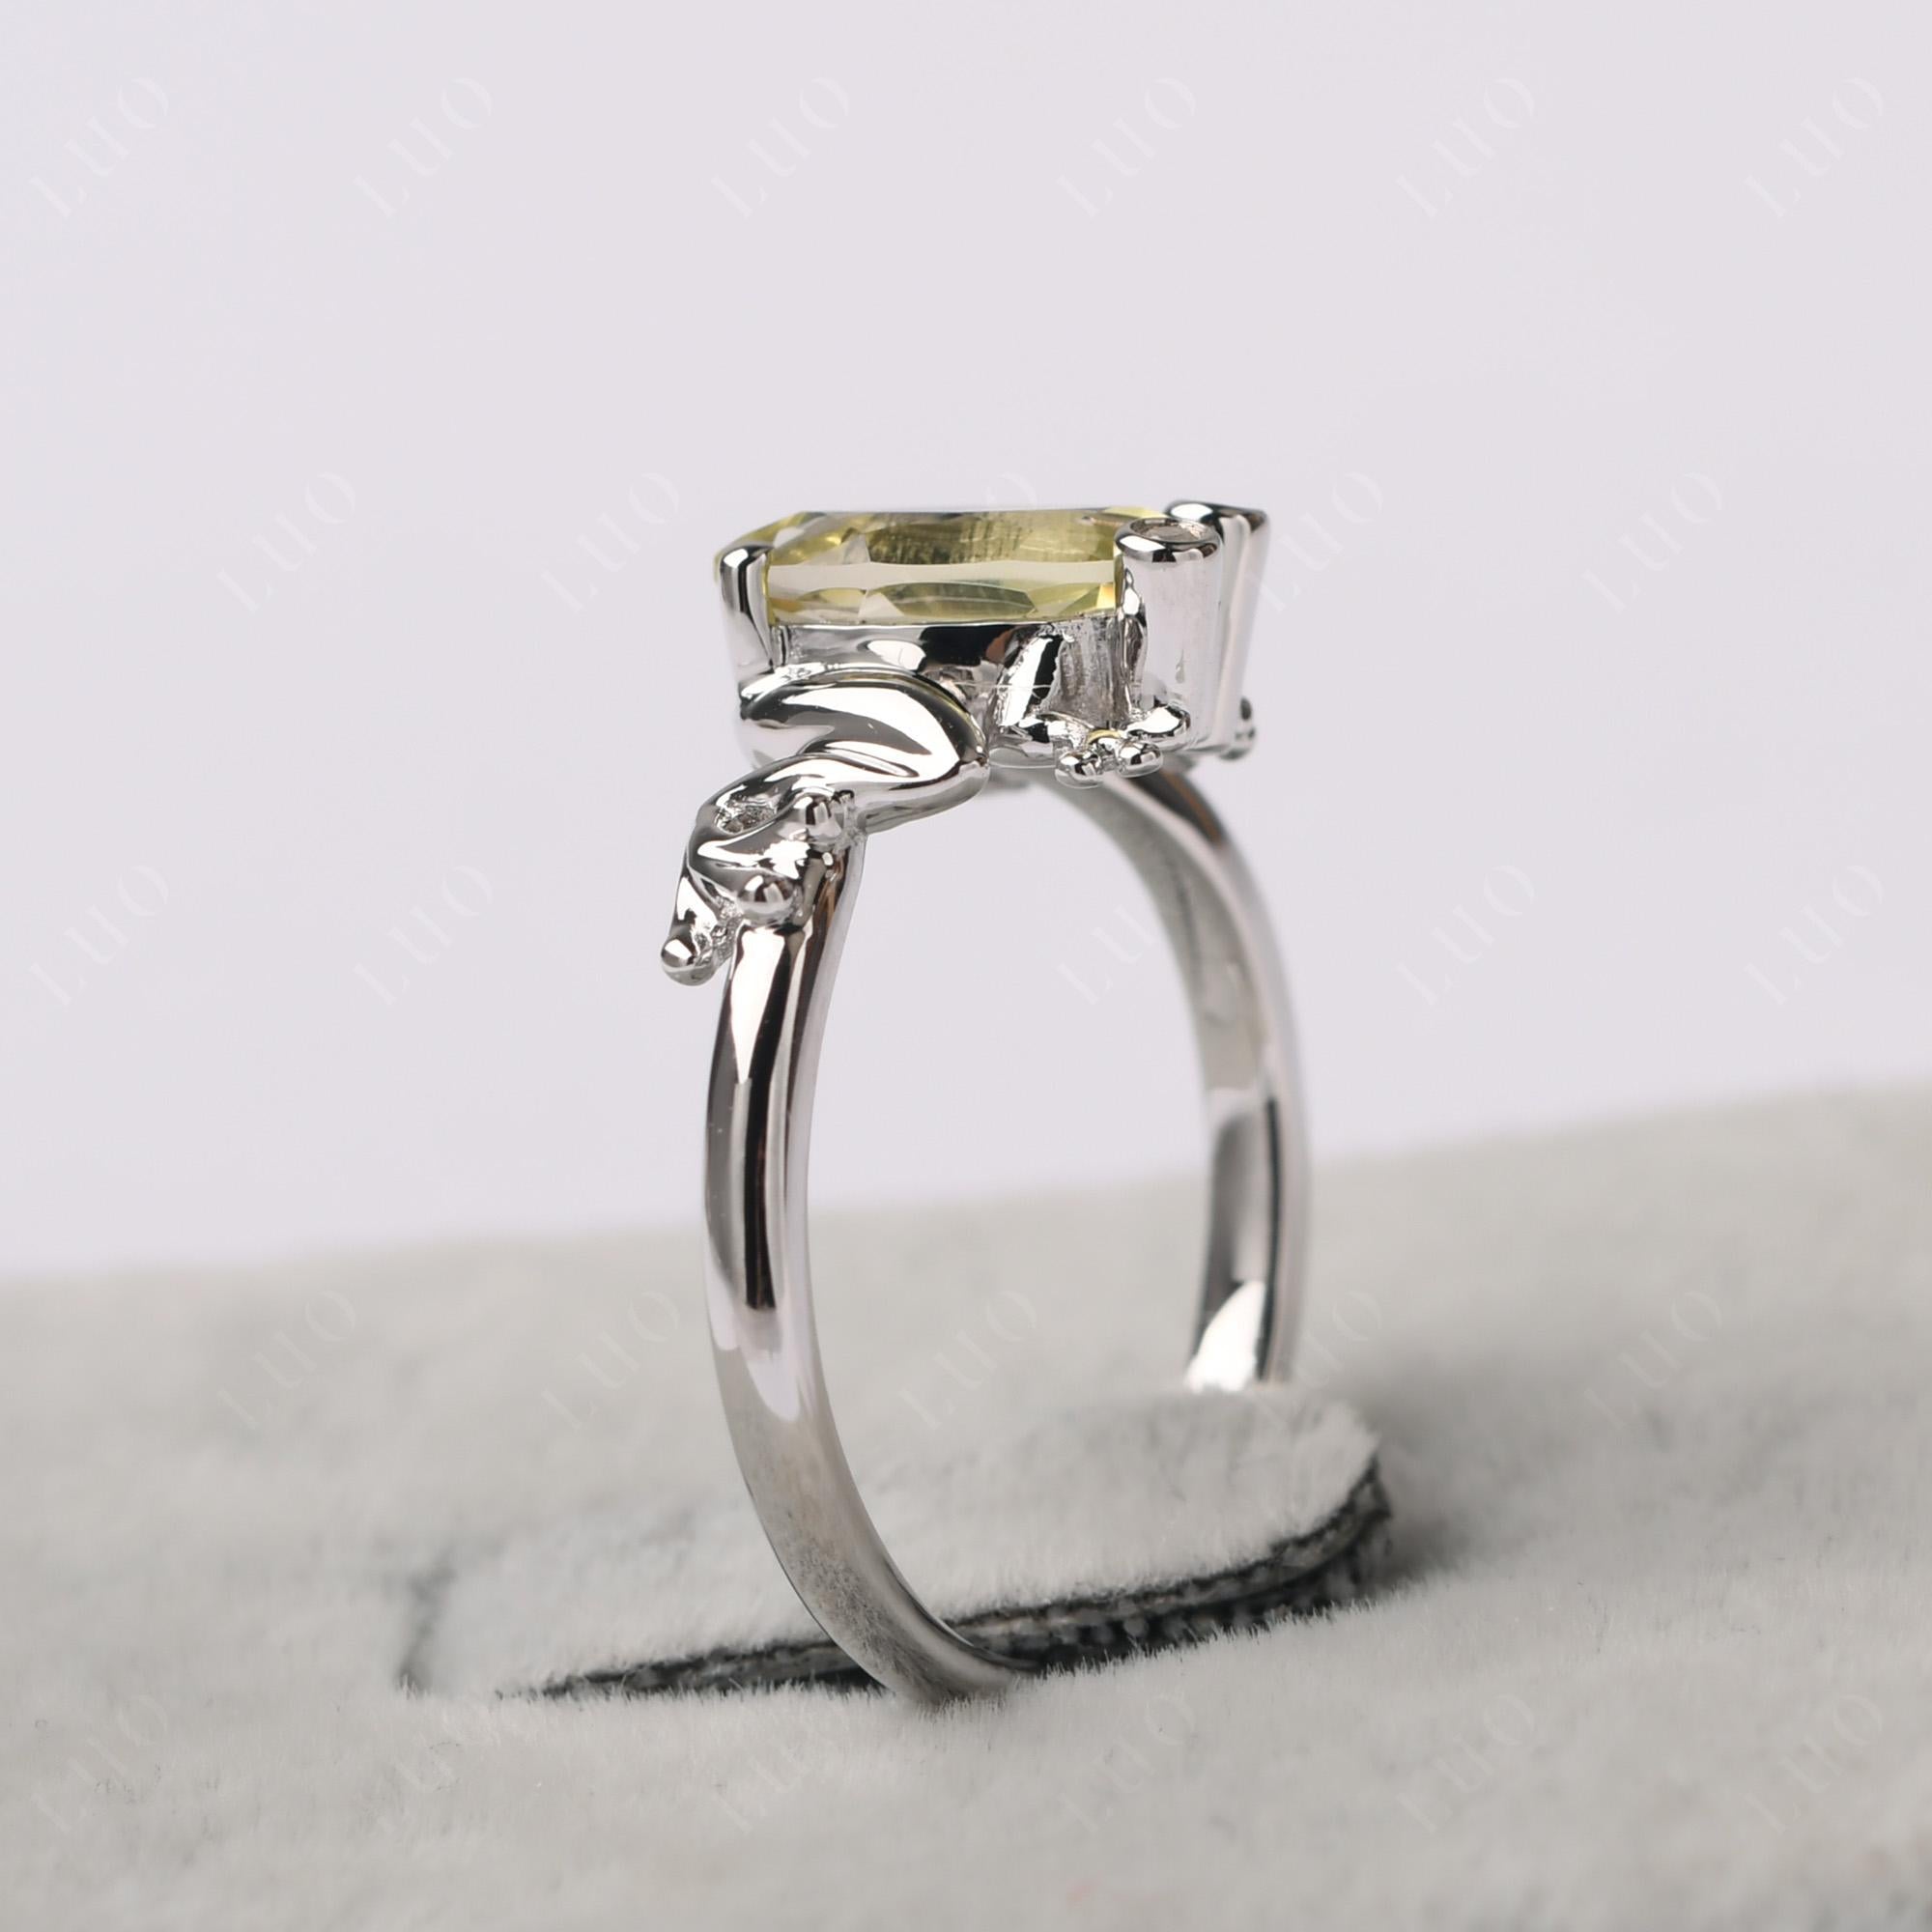 Marquise Cut Lemon Quartz Frog Ring - LUO Jewelry